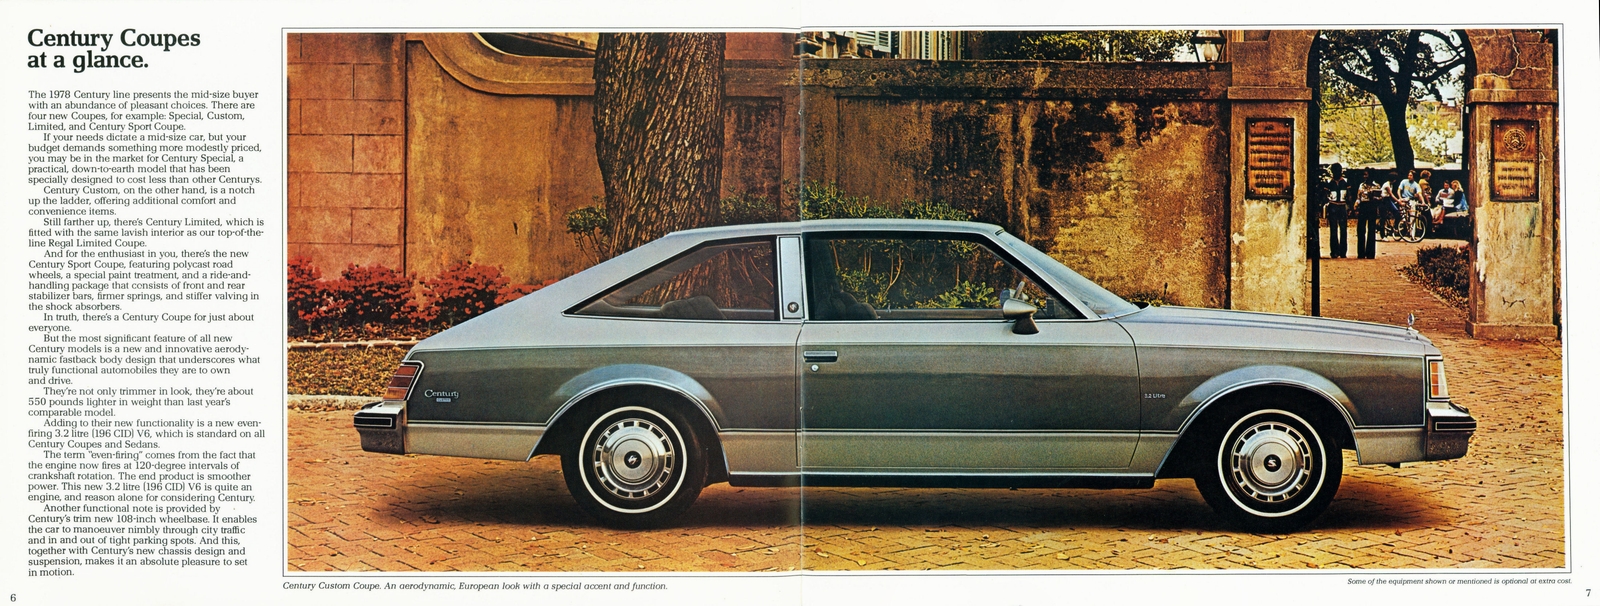 n_1978 Buick Century-Regal (Cdn)-06-07.jpg